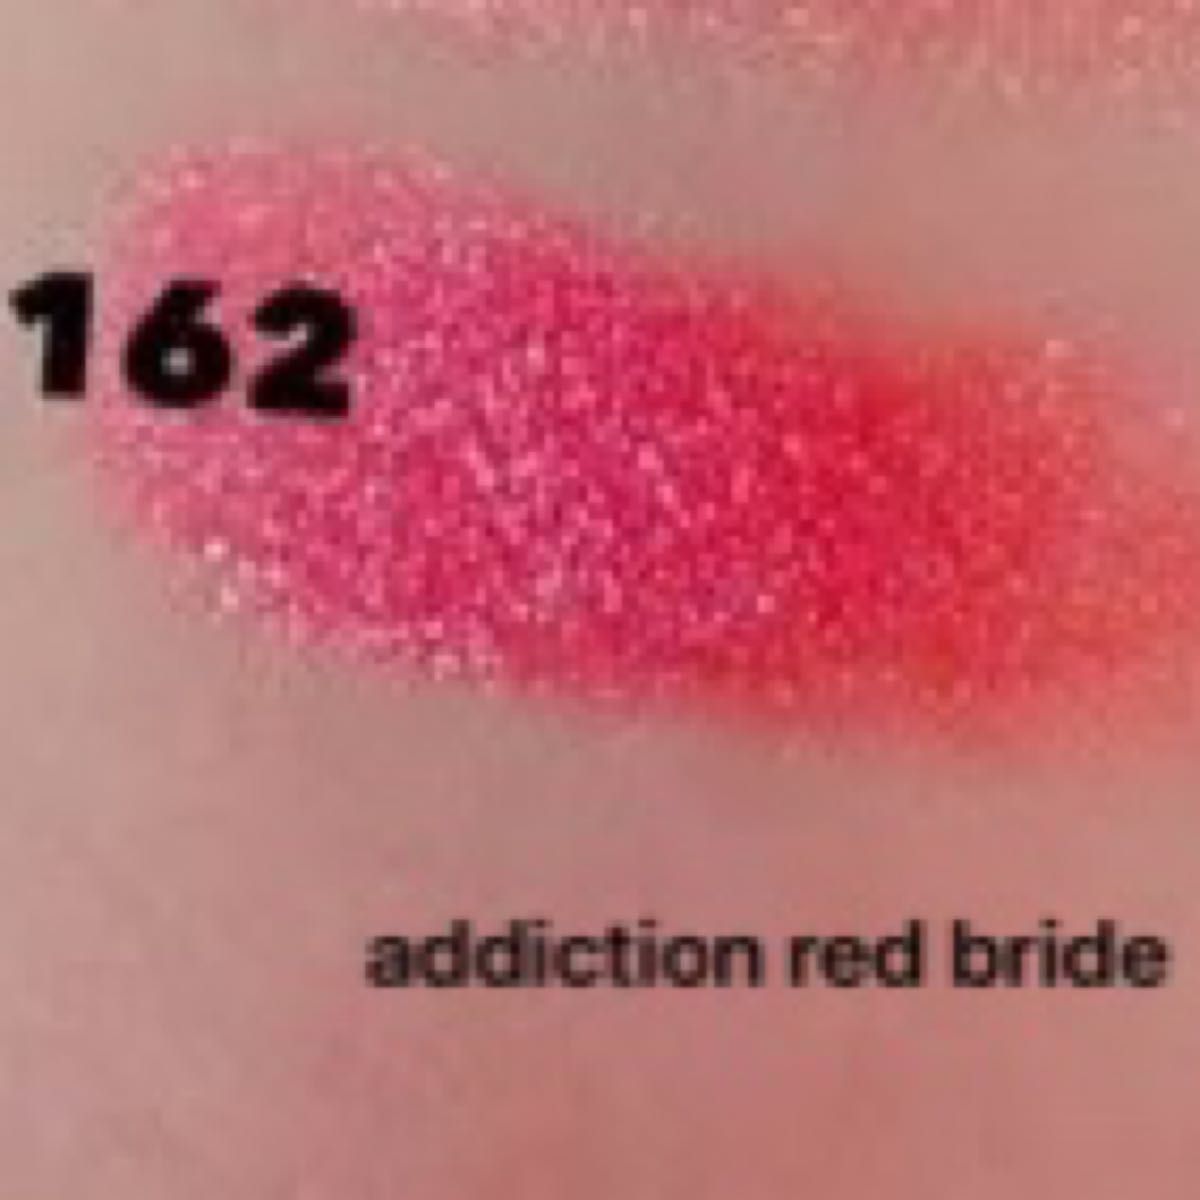 ★☆★  ADDICTION ザアイシャドウ Red Bride 162  残量95〜 限定品　★☆★